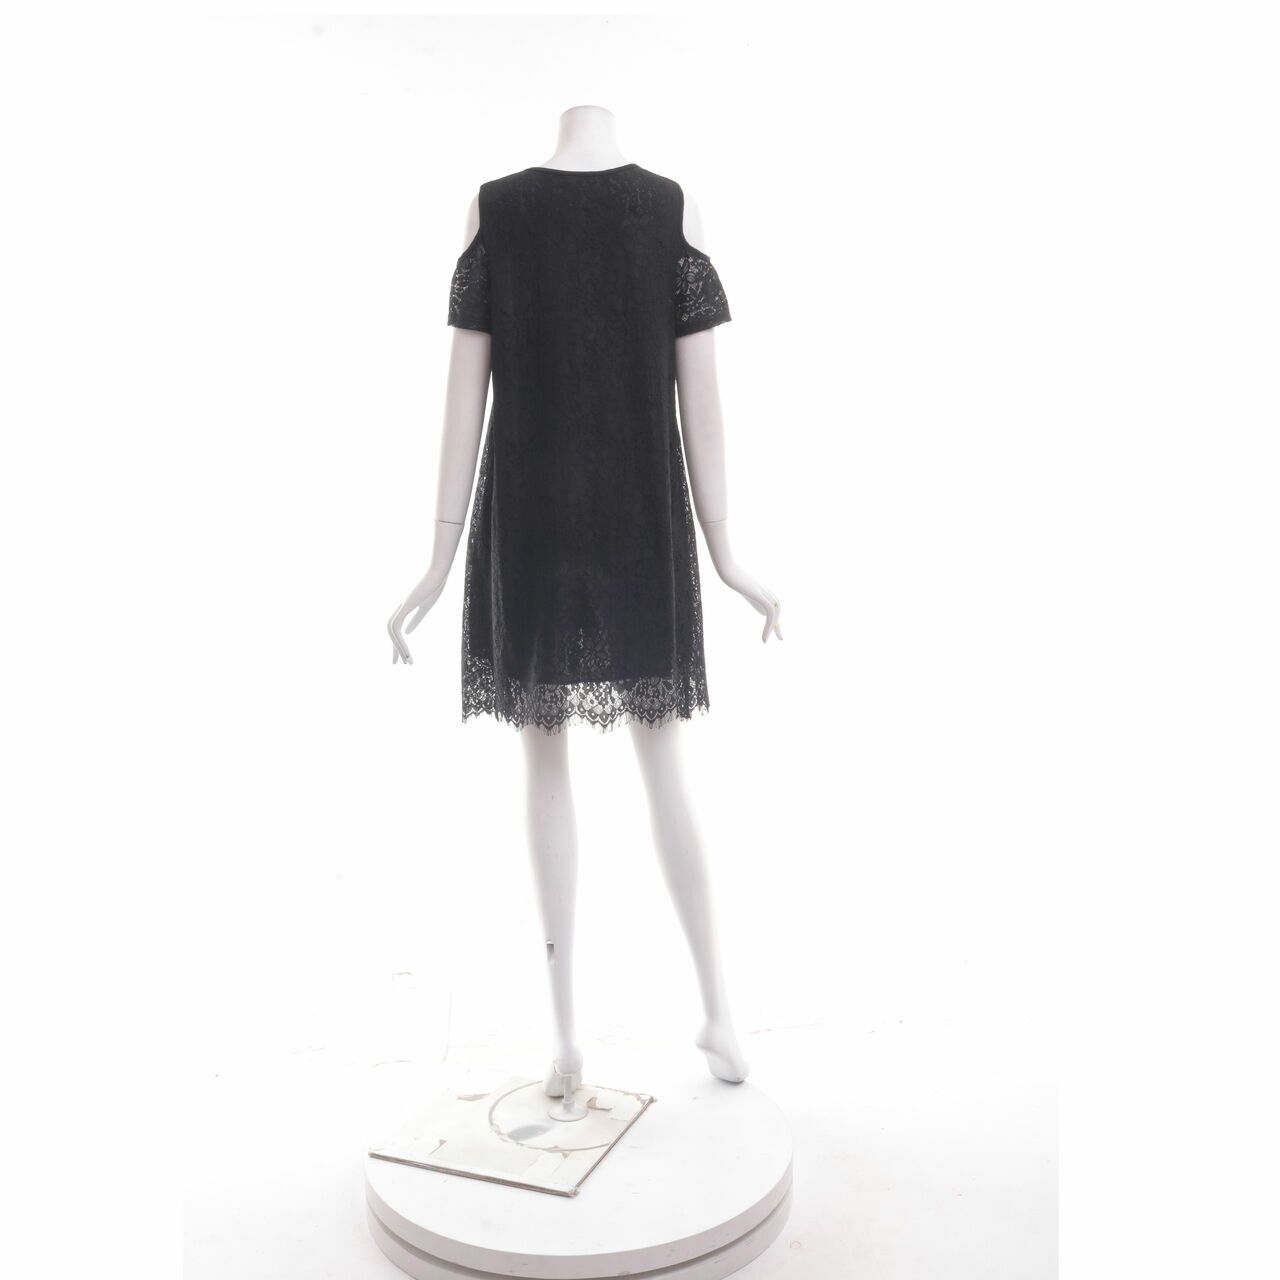 TheoryX Black Lace Mini Dress